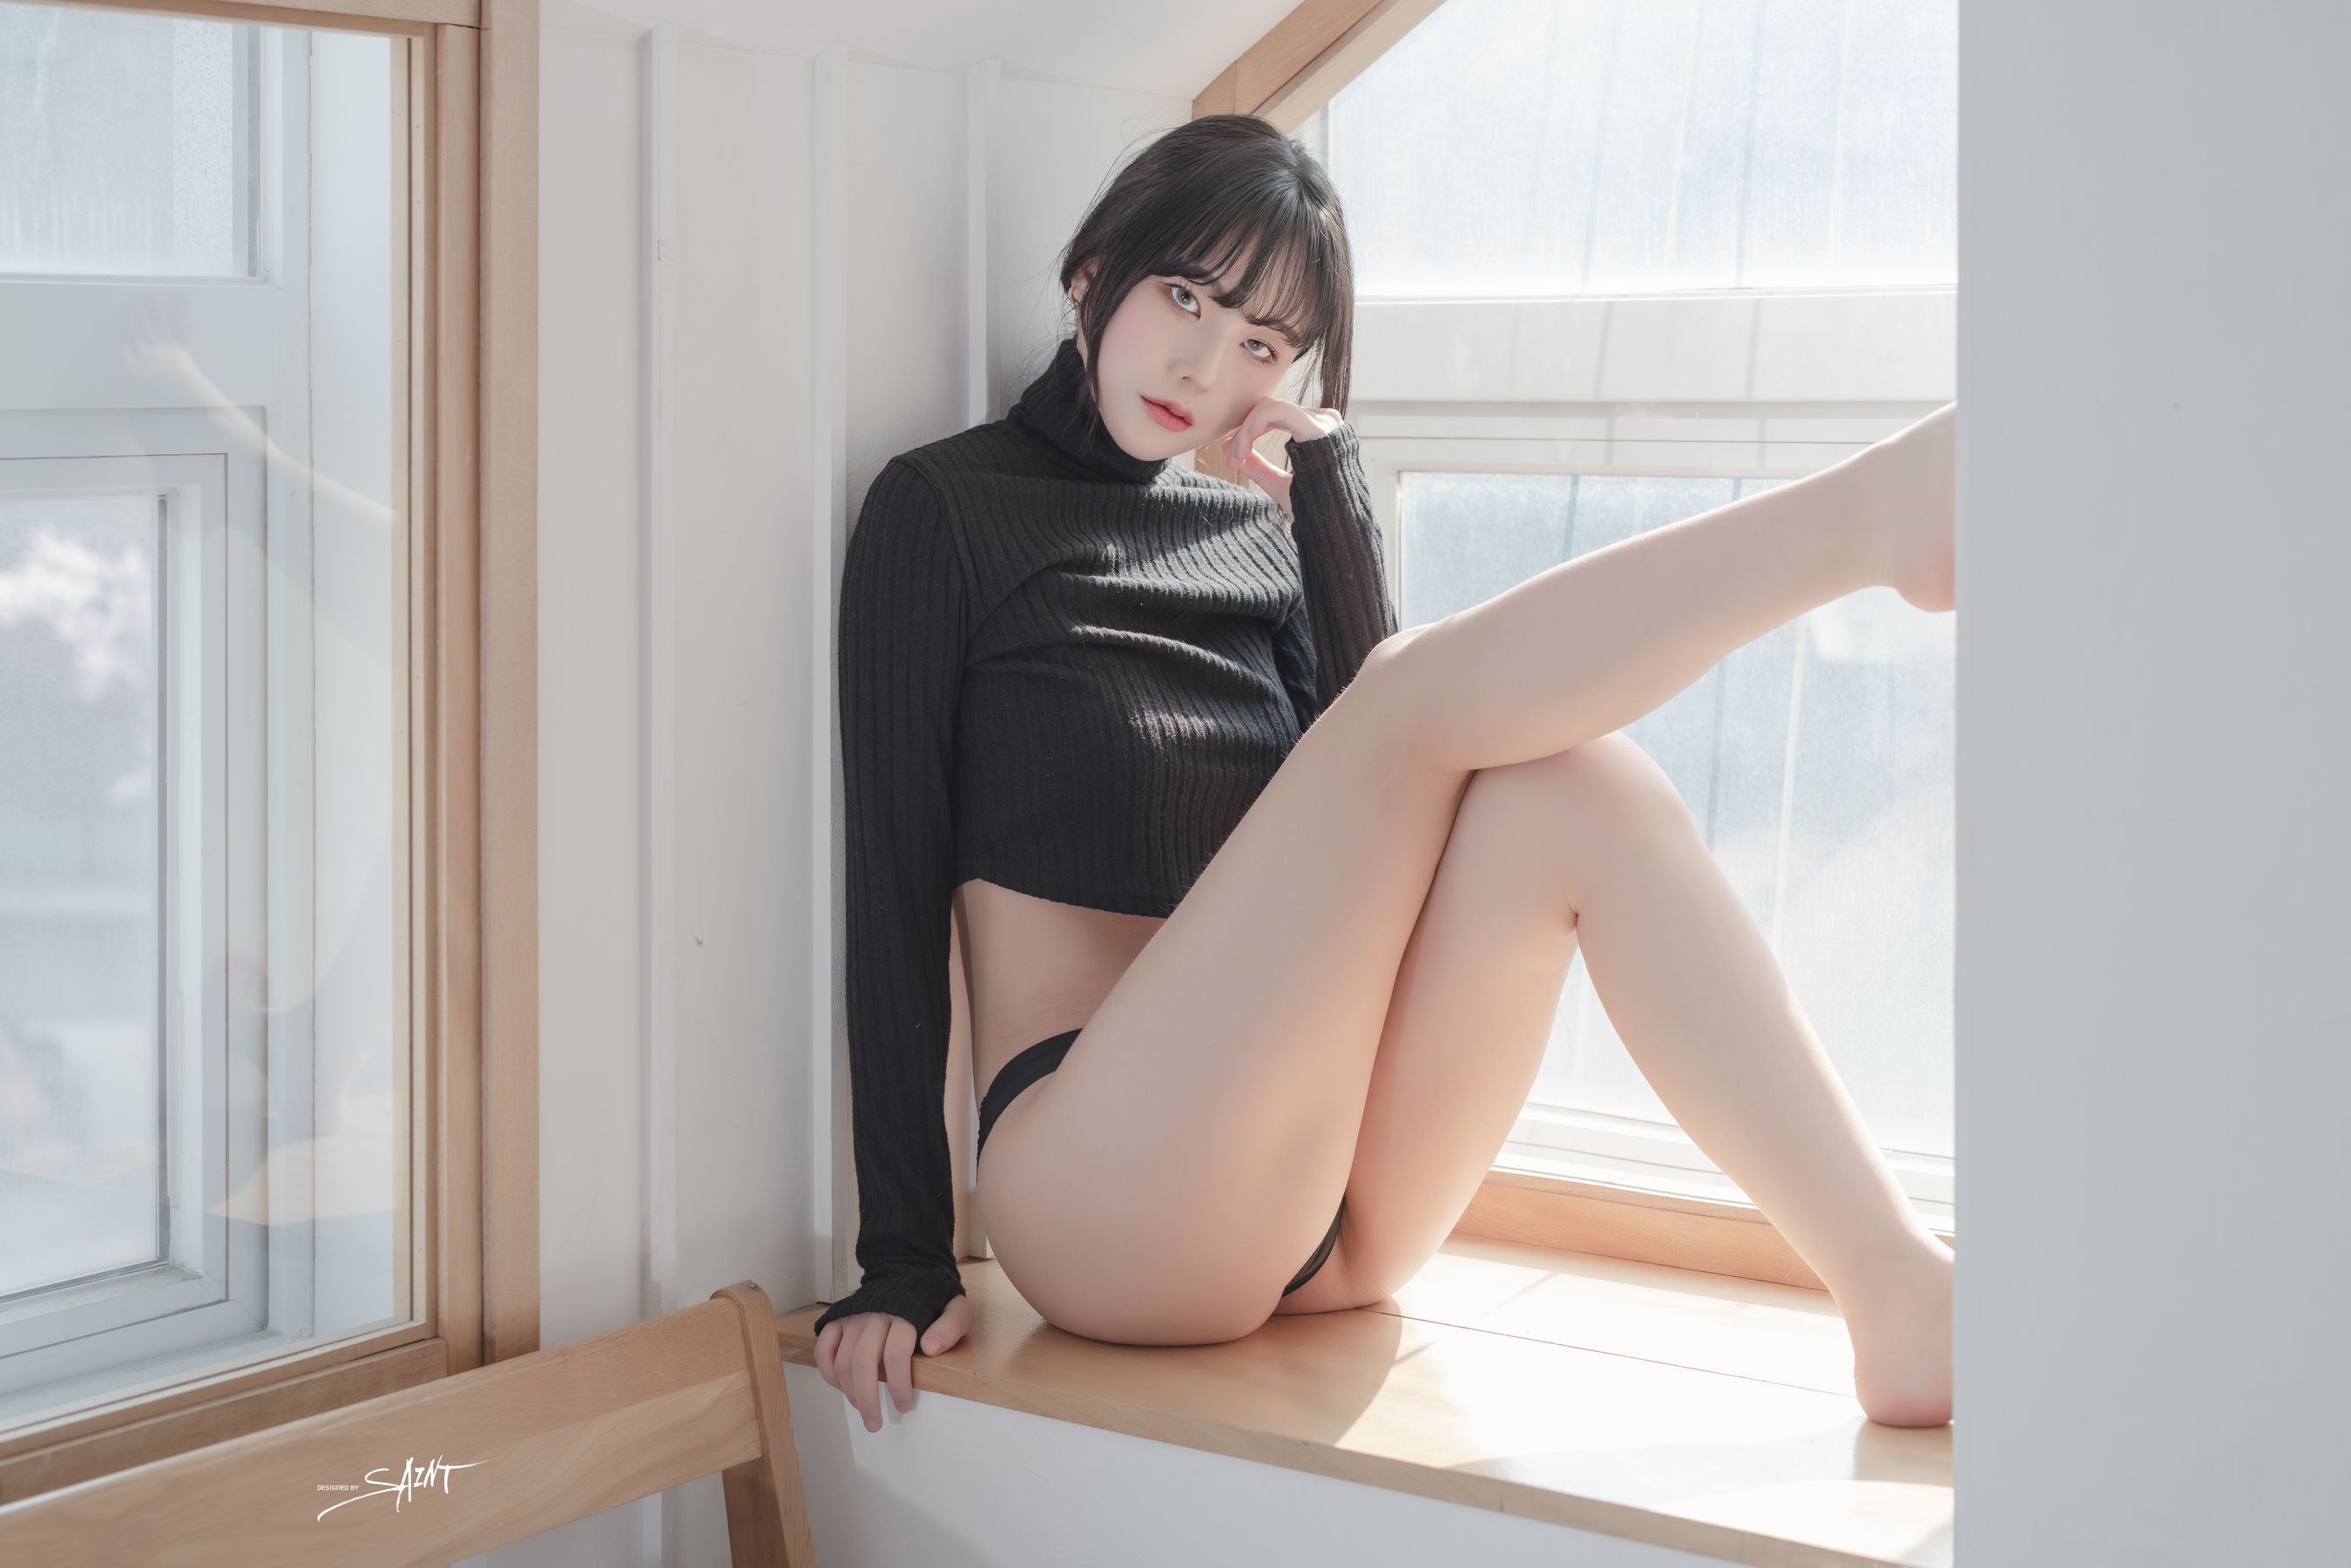 [saintphotolife]  Yuna - No.11 Love On Top